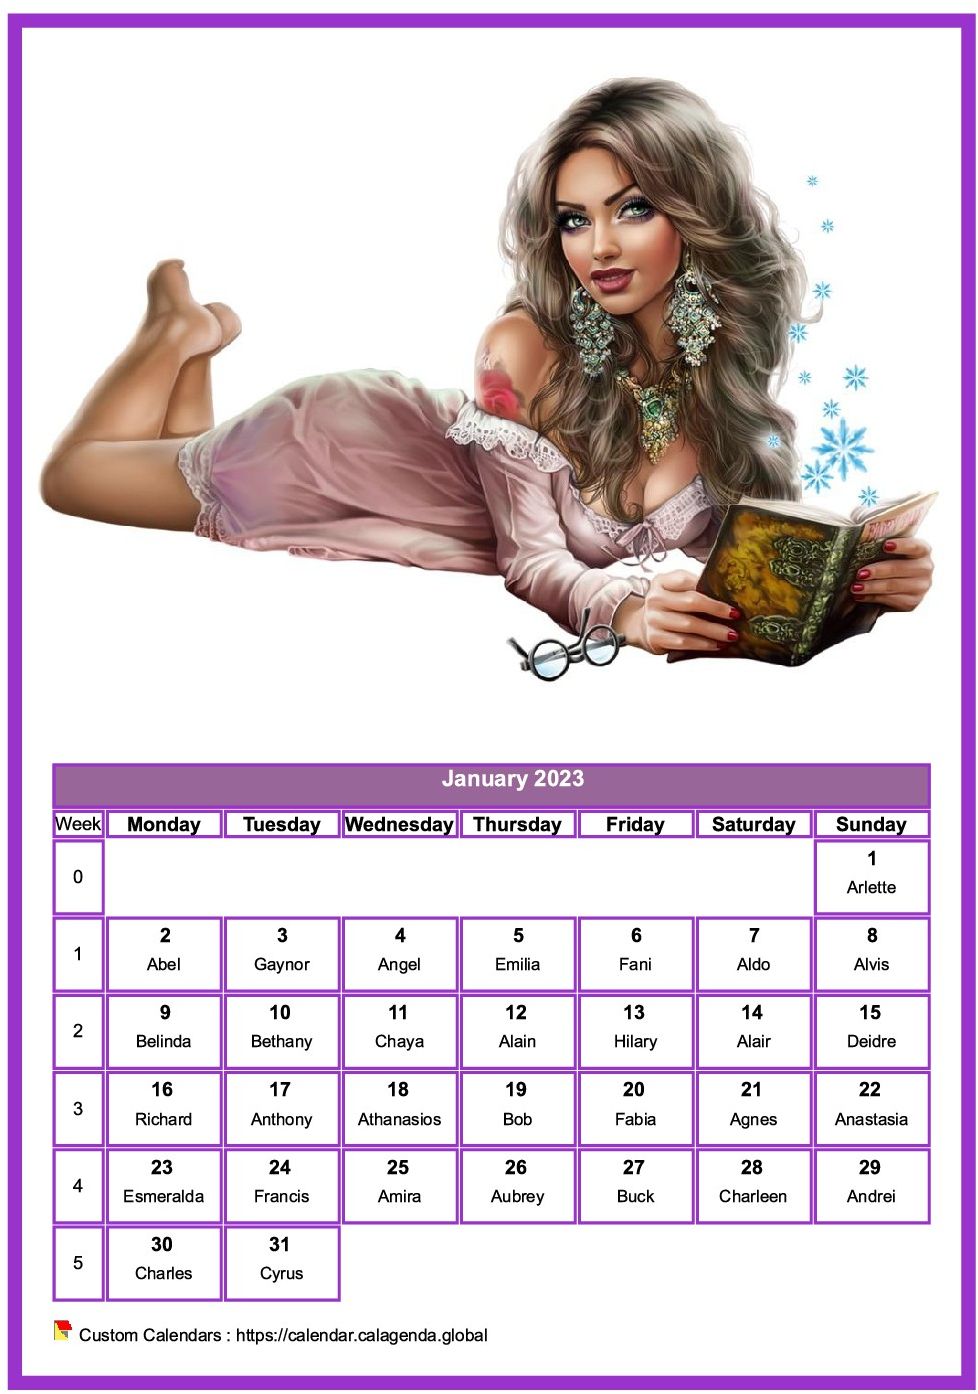 Calendar January 2023 women